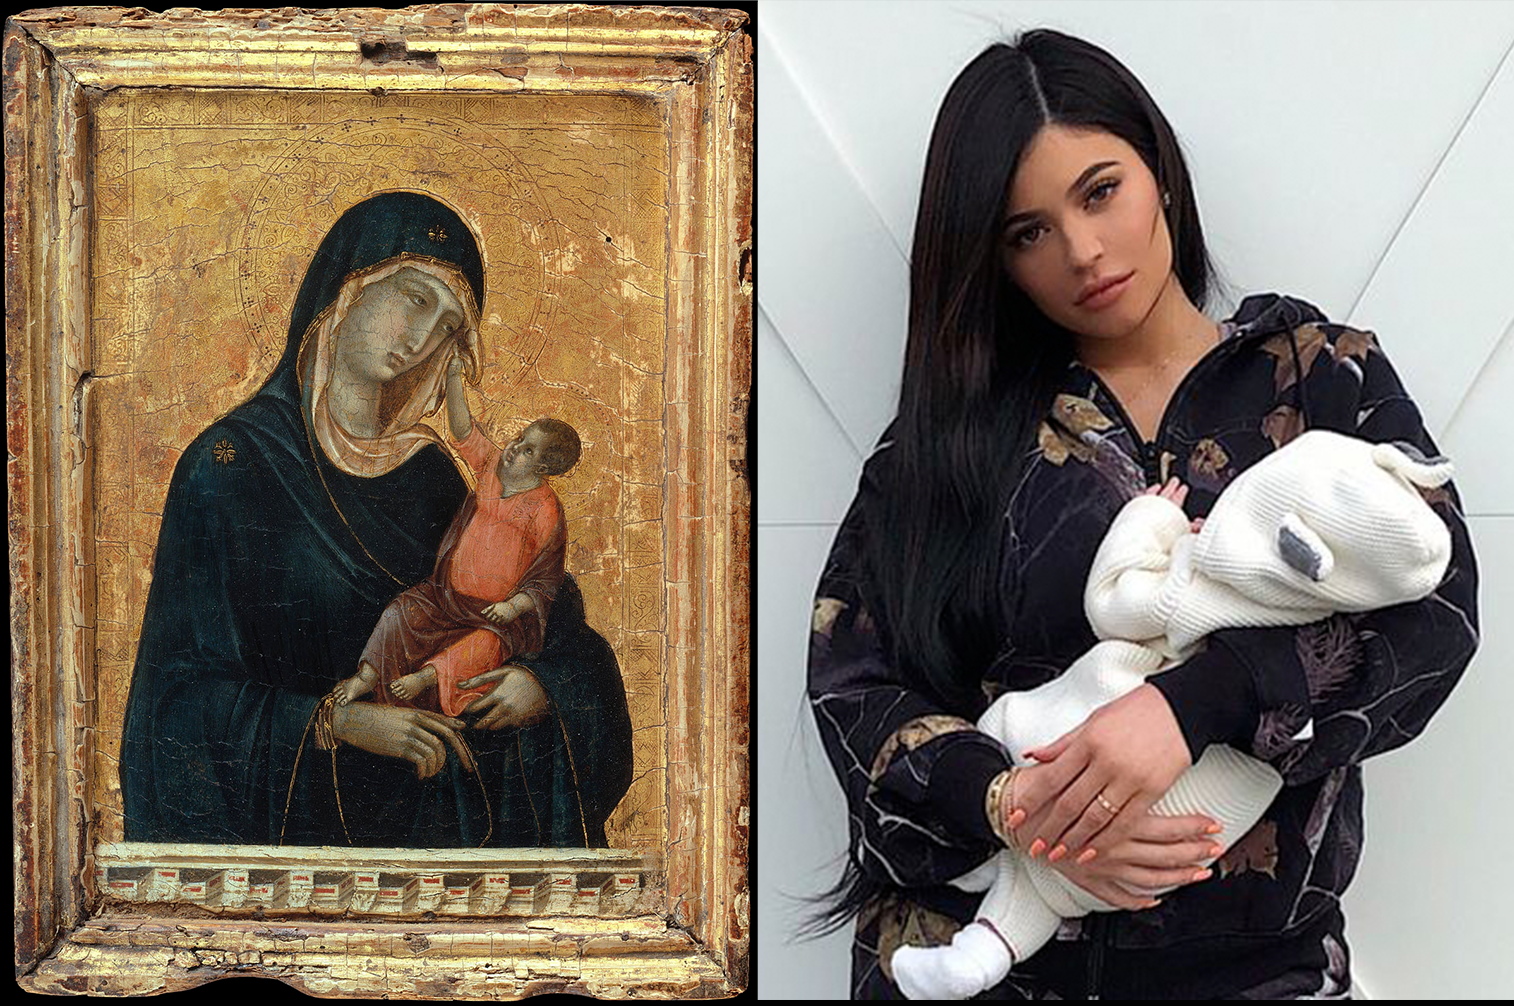 Religion vs. Social Media: From the Virgin Mary to the Vulgar Kylie